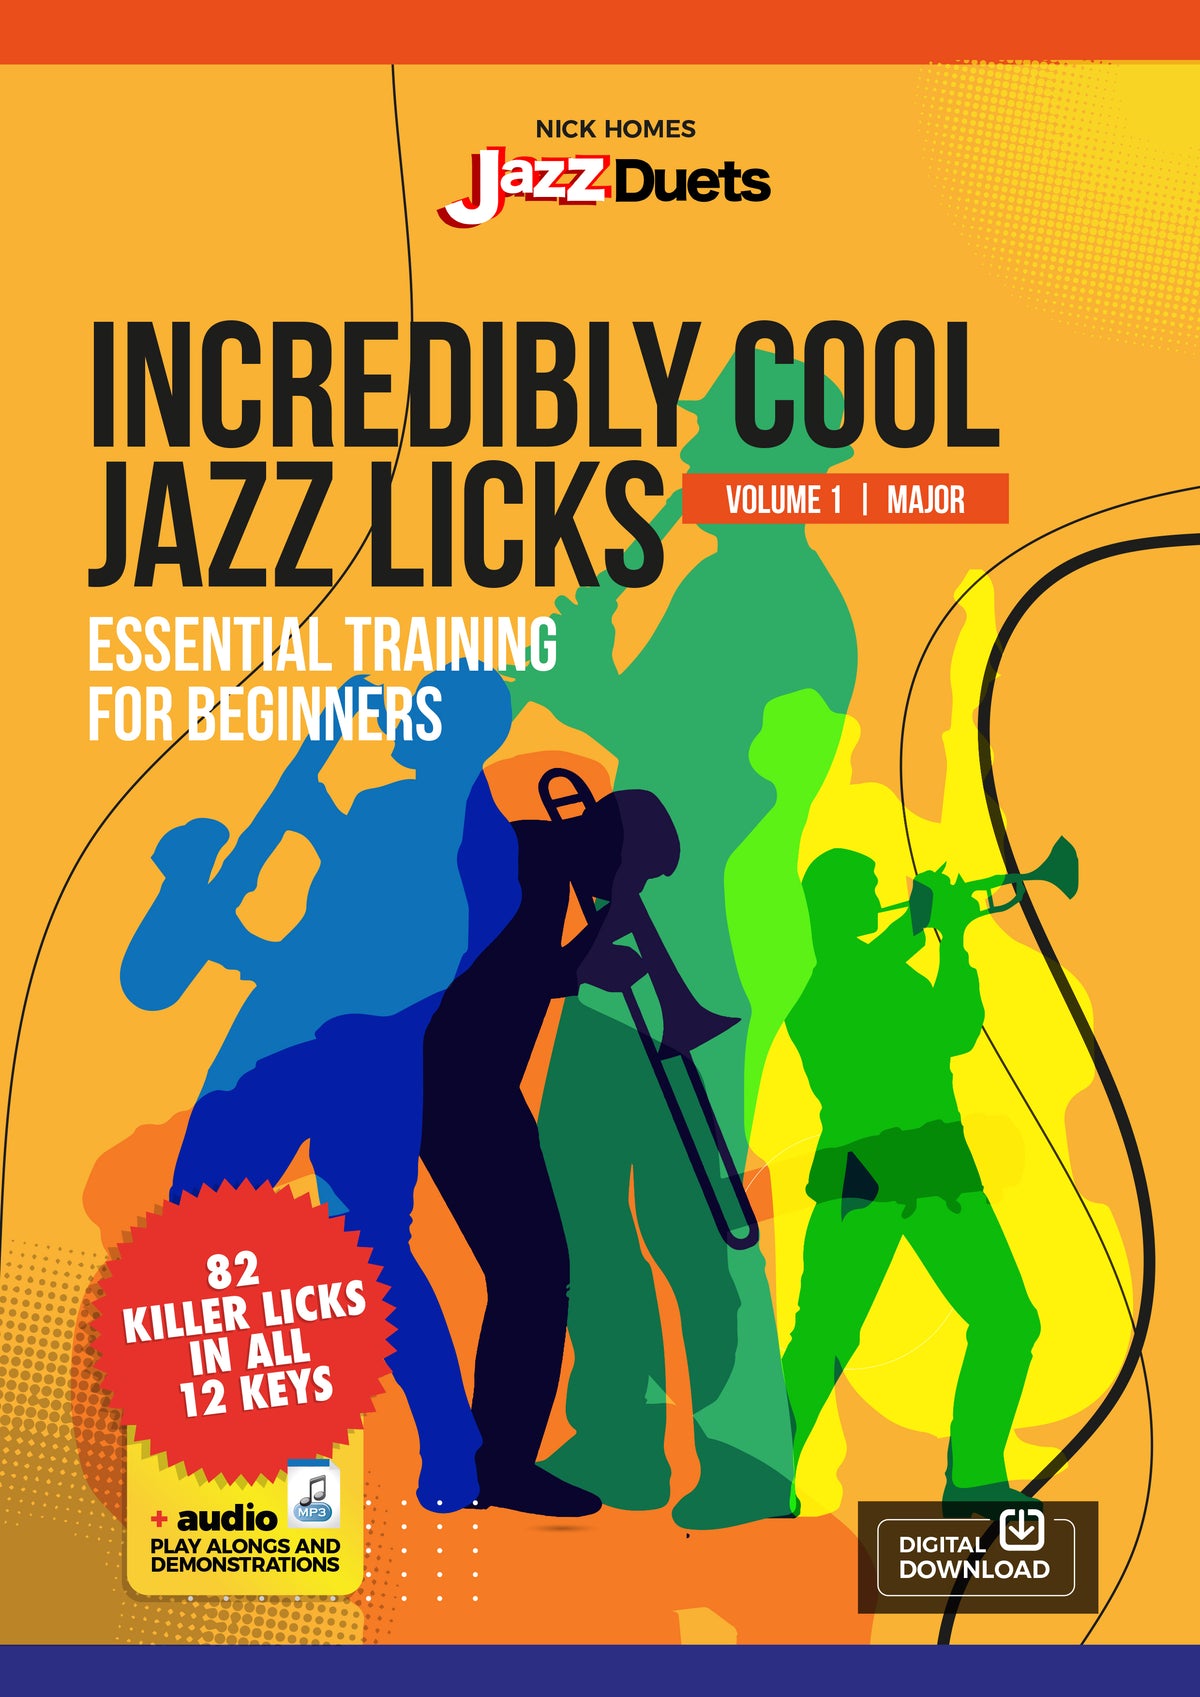 Incredibly Cool Jazz licks - Volume 1